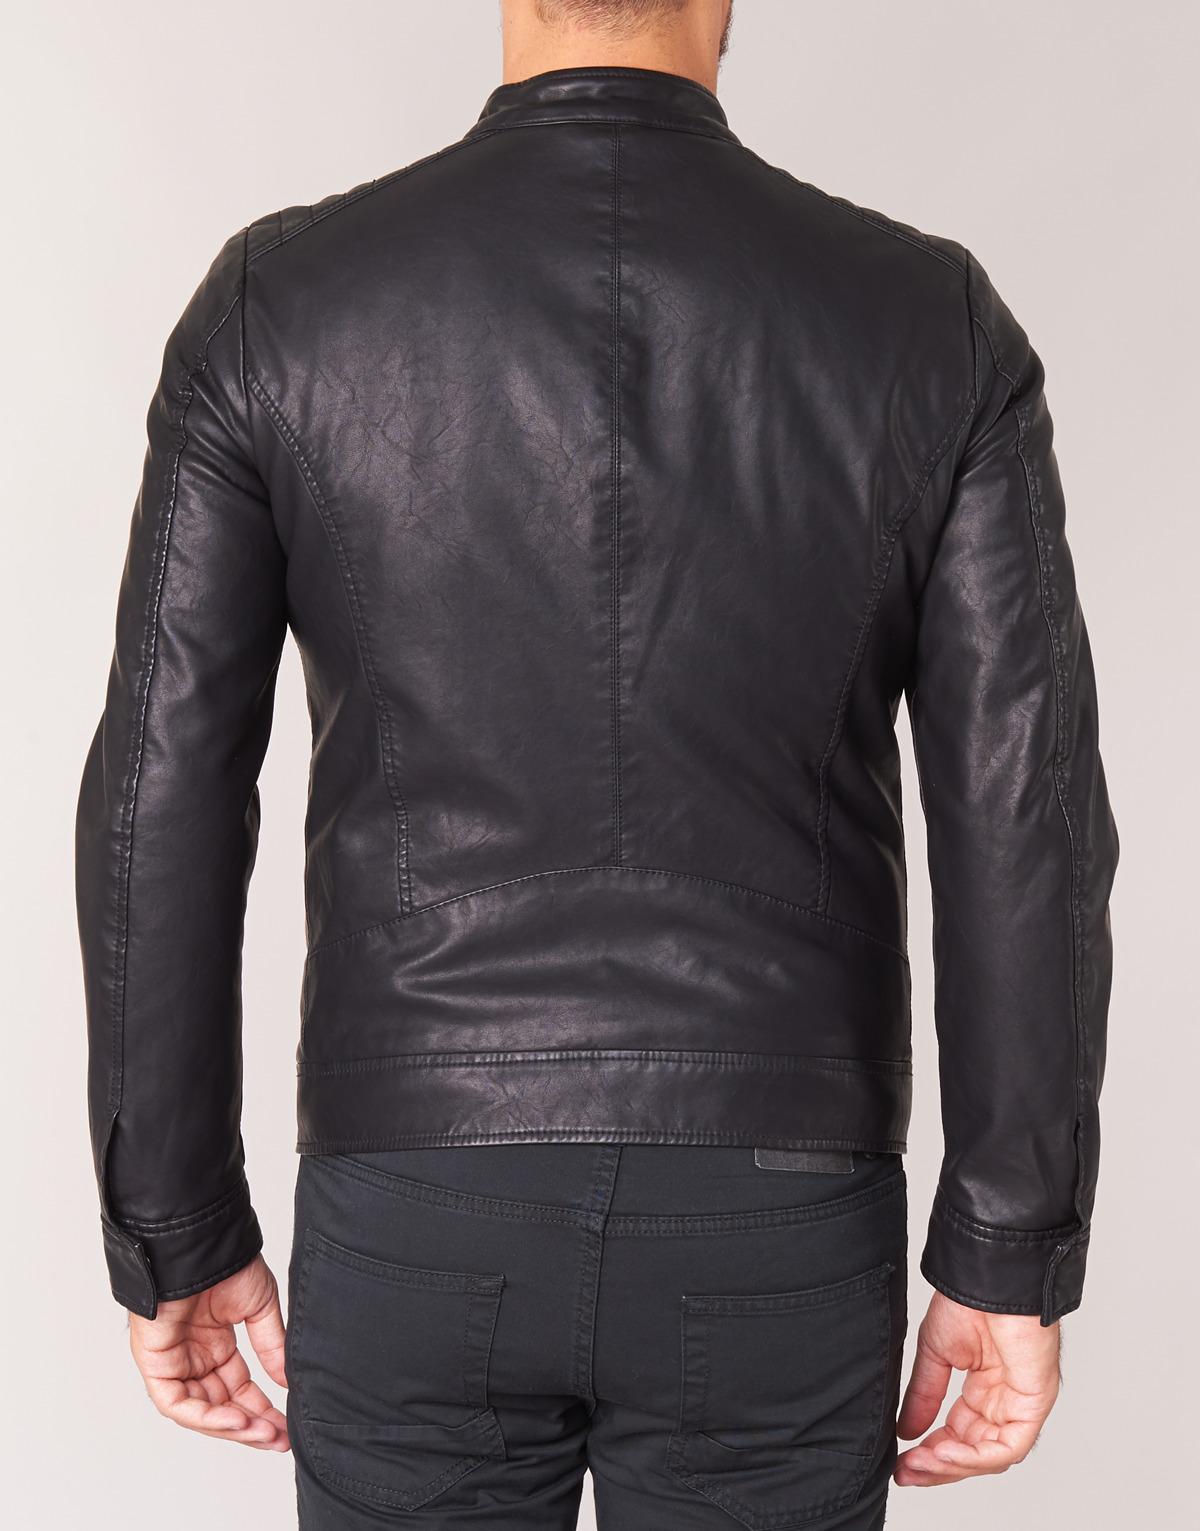 Benetton Mirage Men's Leather Jacket In Black for Men - Lyst